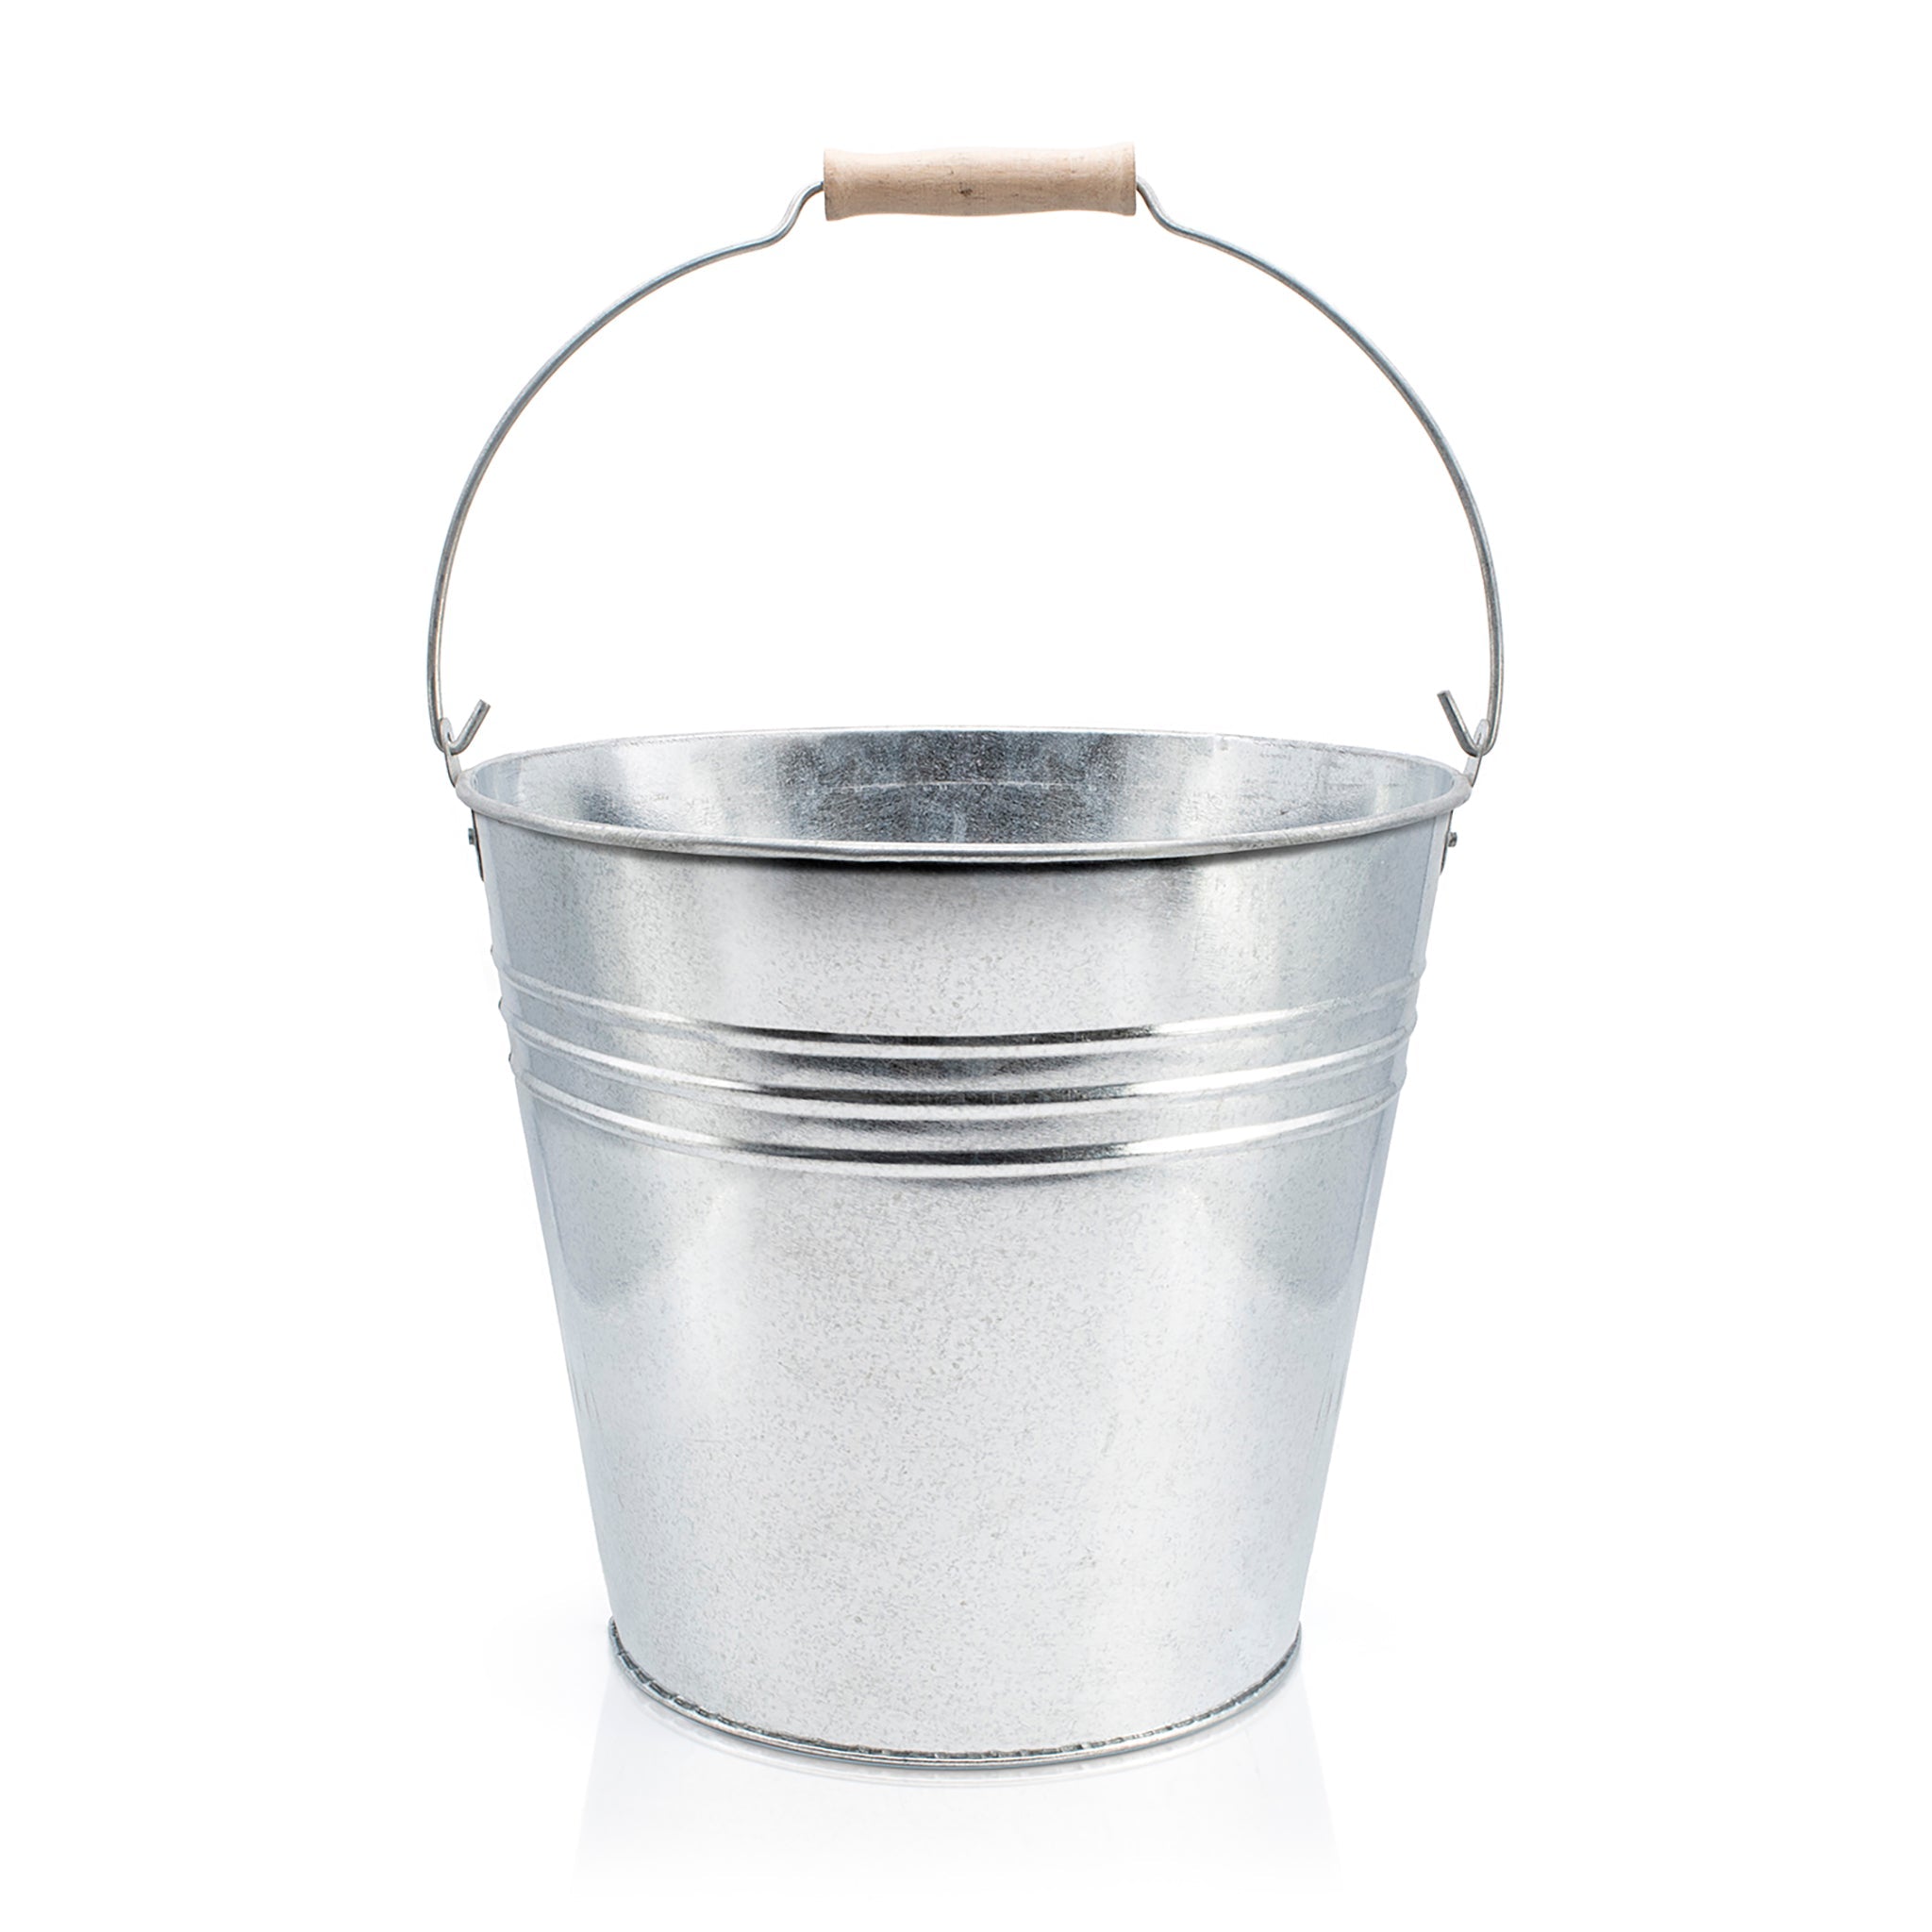 galvanised metal bucket with wooden handle elevated